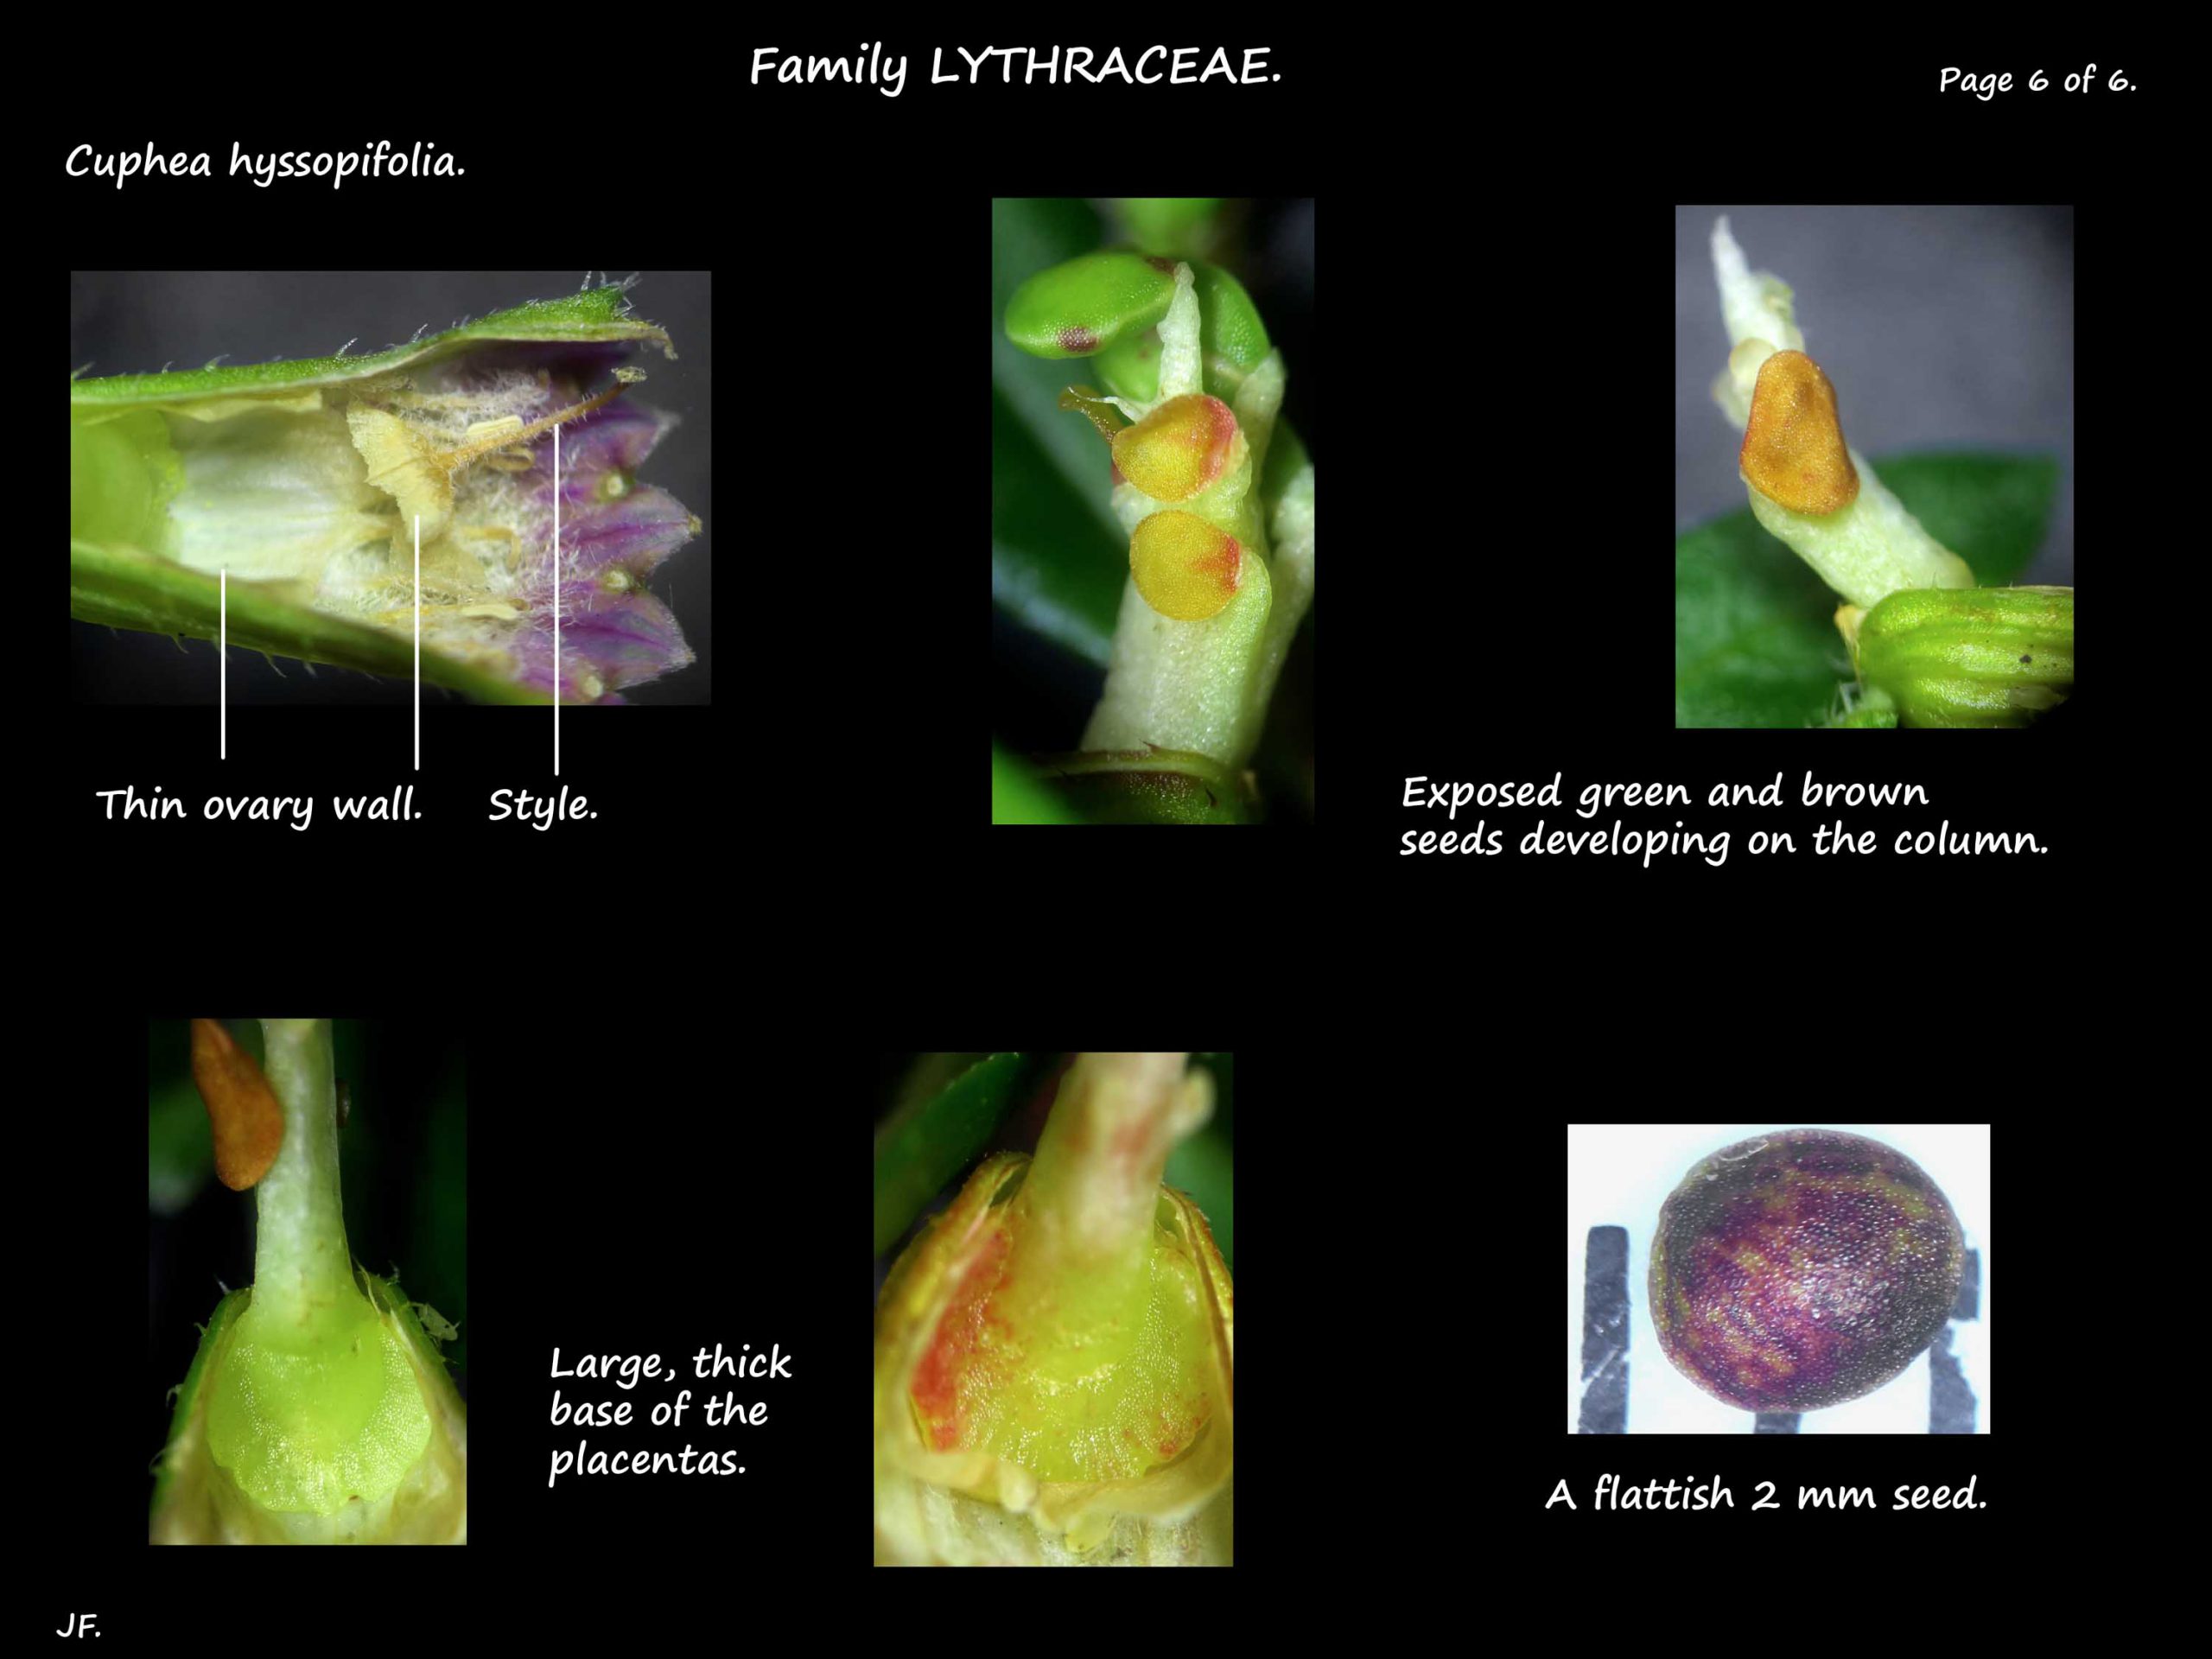 6 Cuphea hyssopifolia ovary & seeds